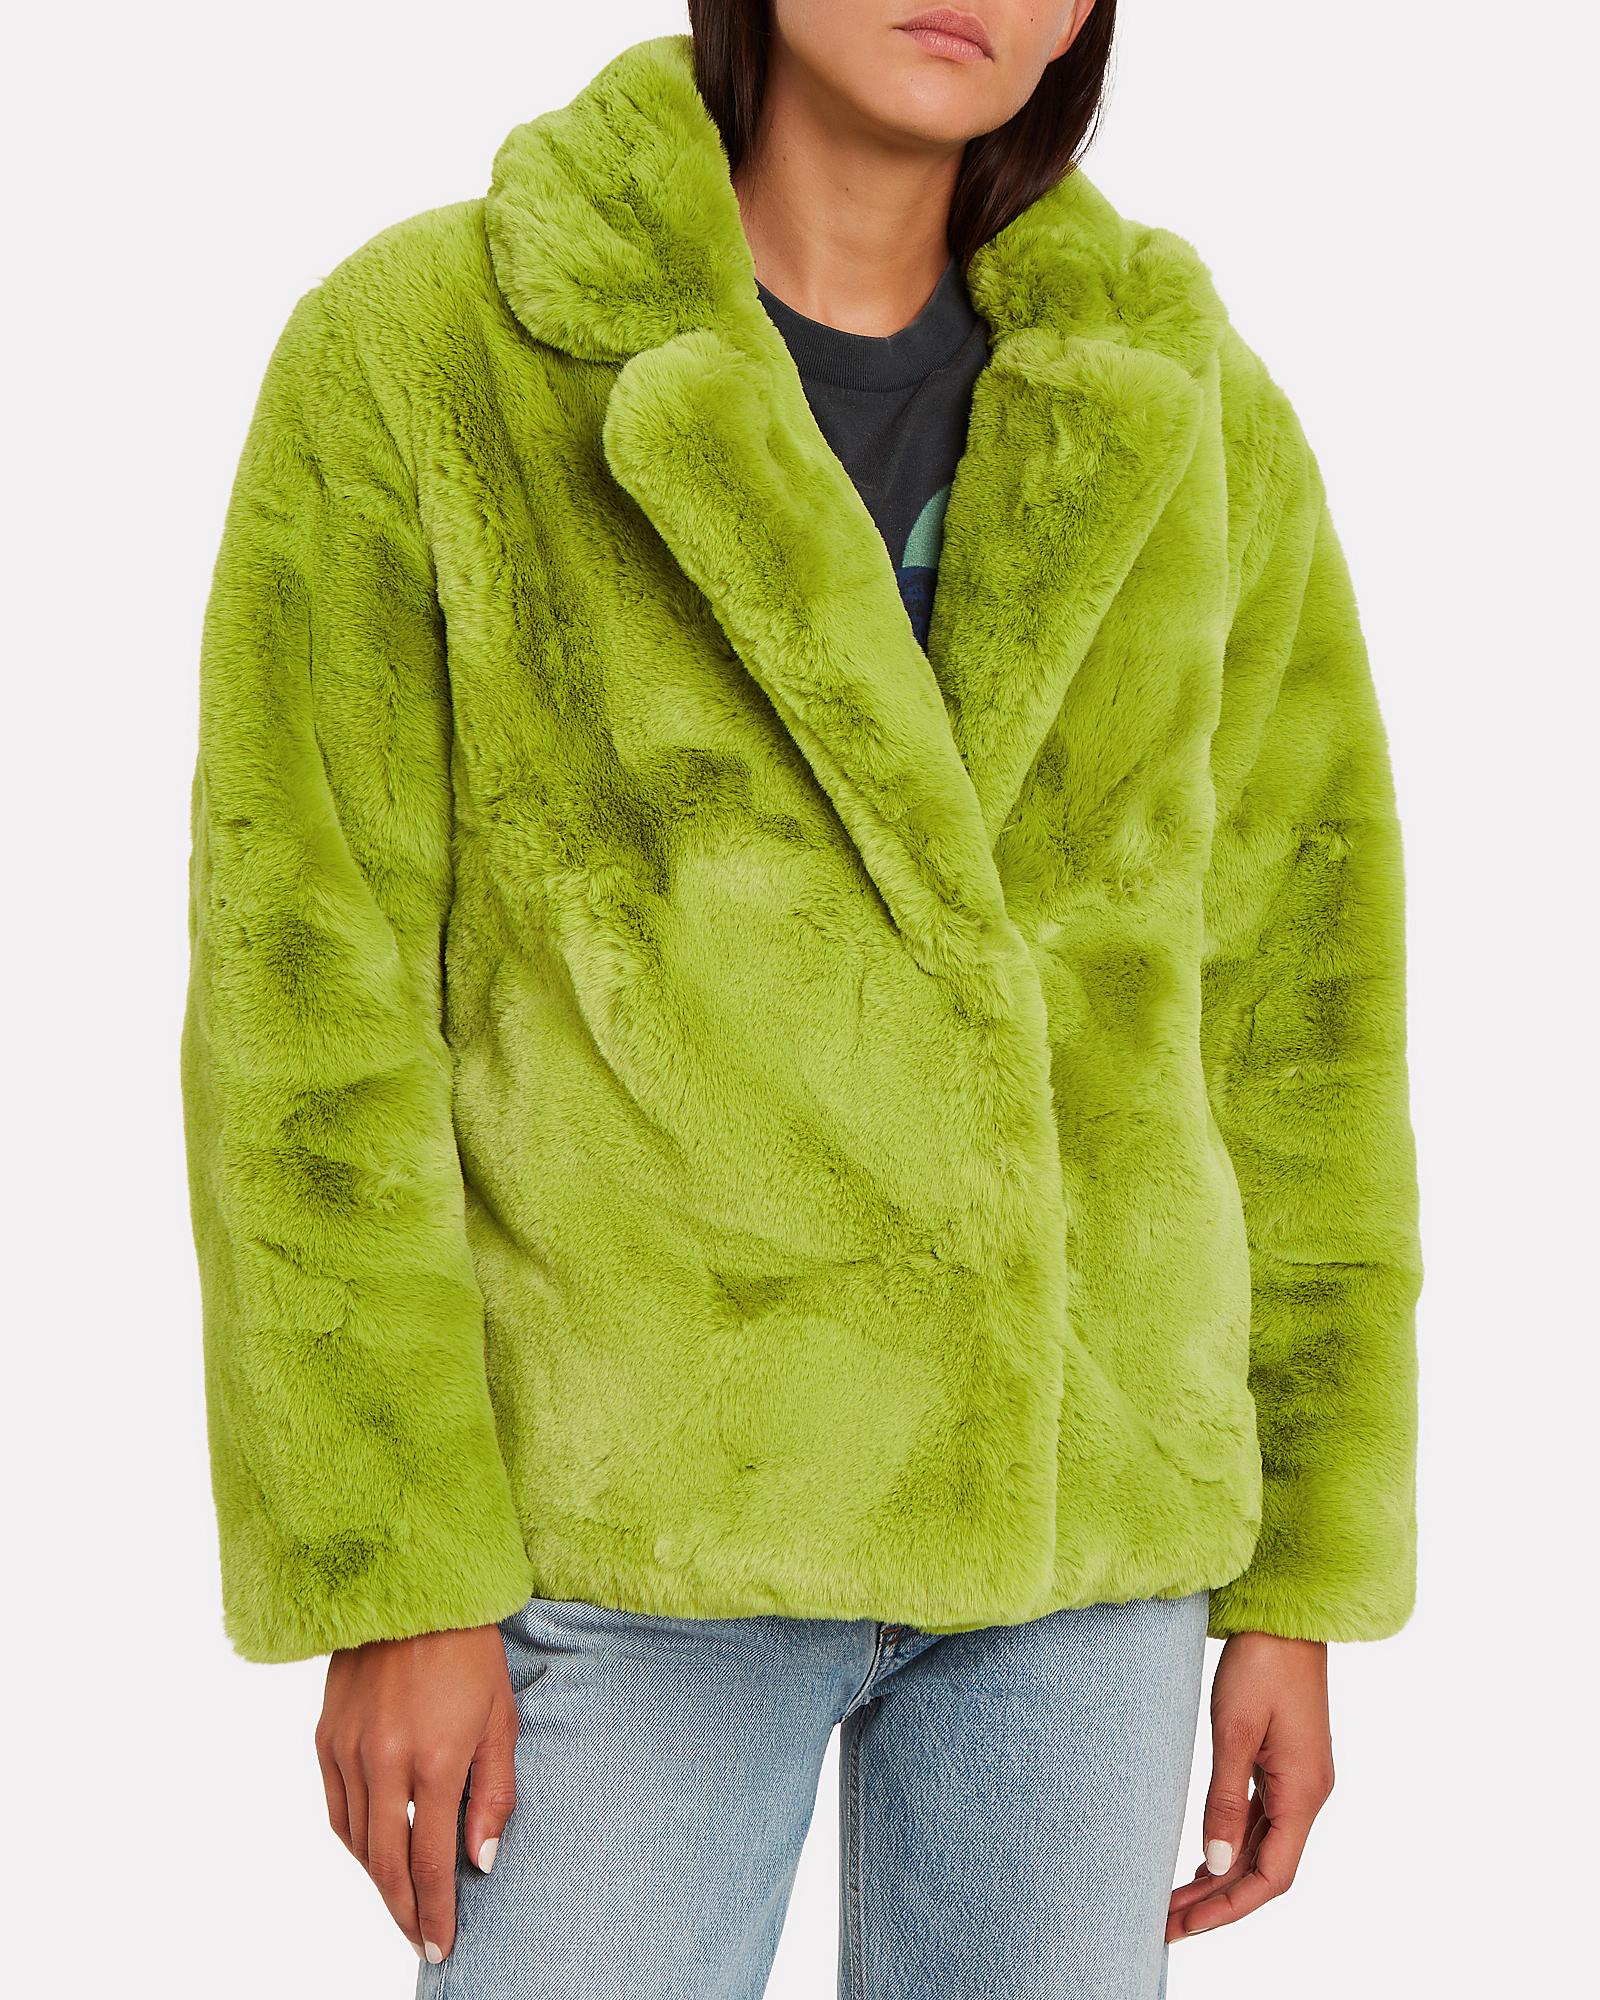 Apparis Manon Neon Faux Fur Coat in Green | Lyst Canada